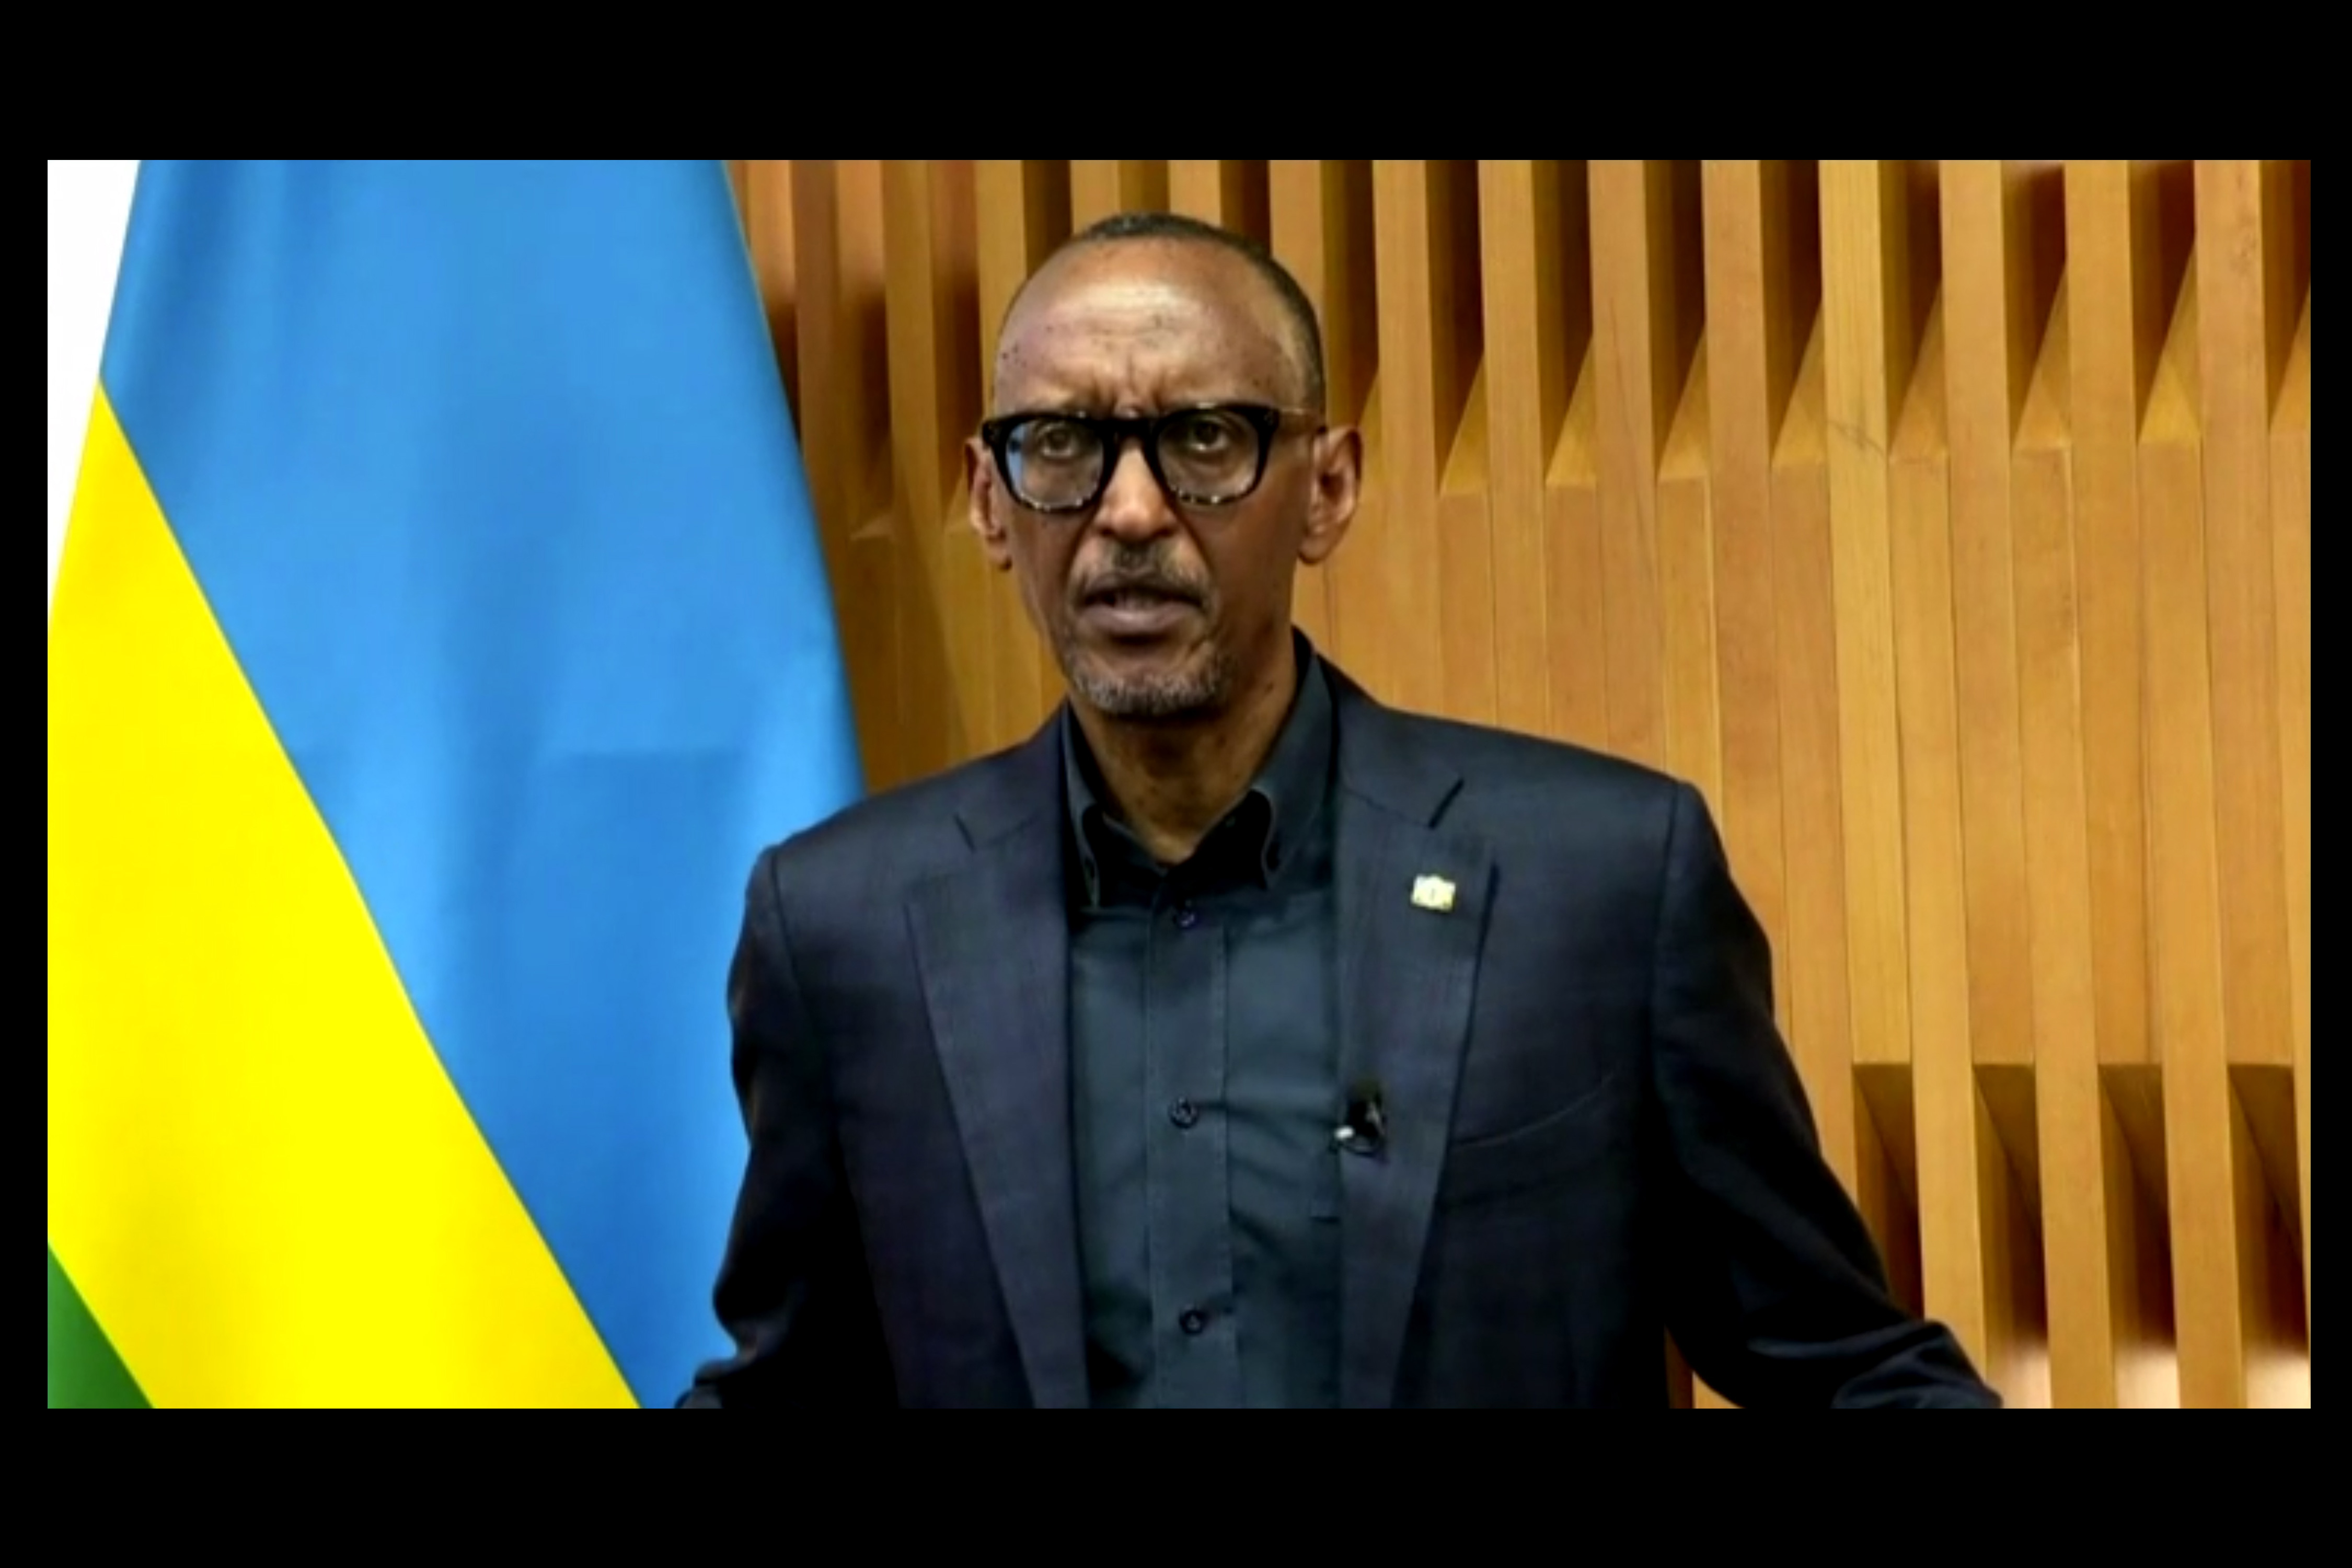 Paul Kagame, President of Rwanda